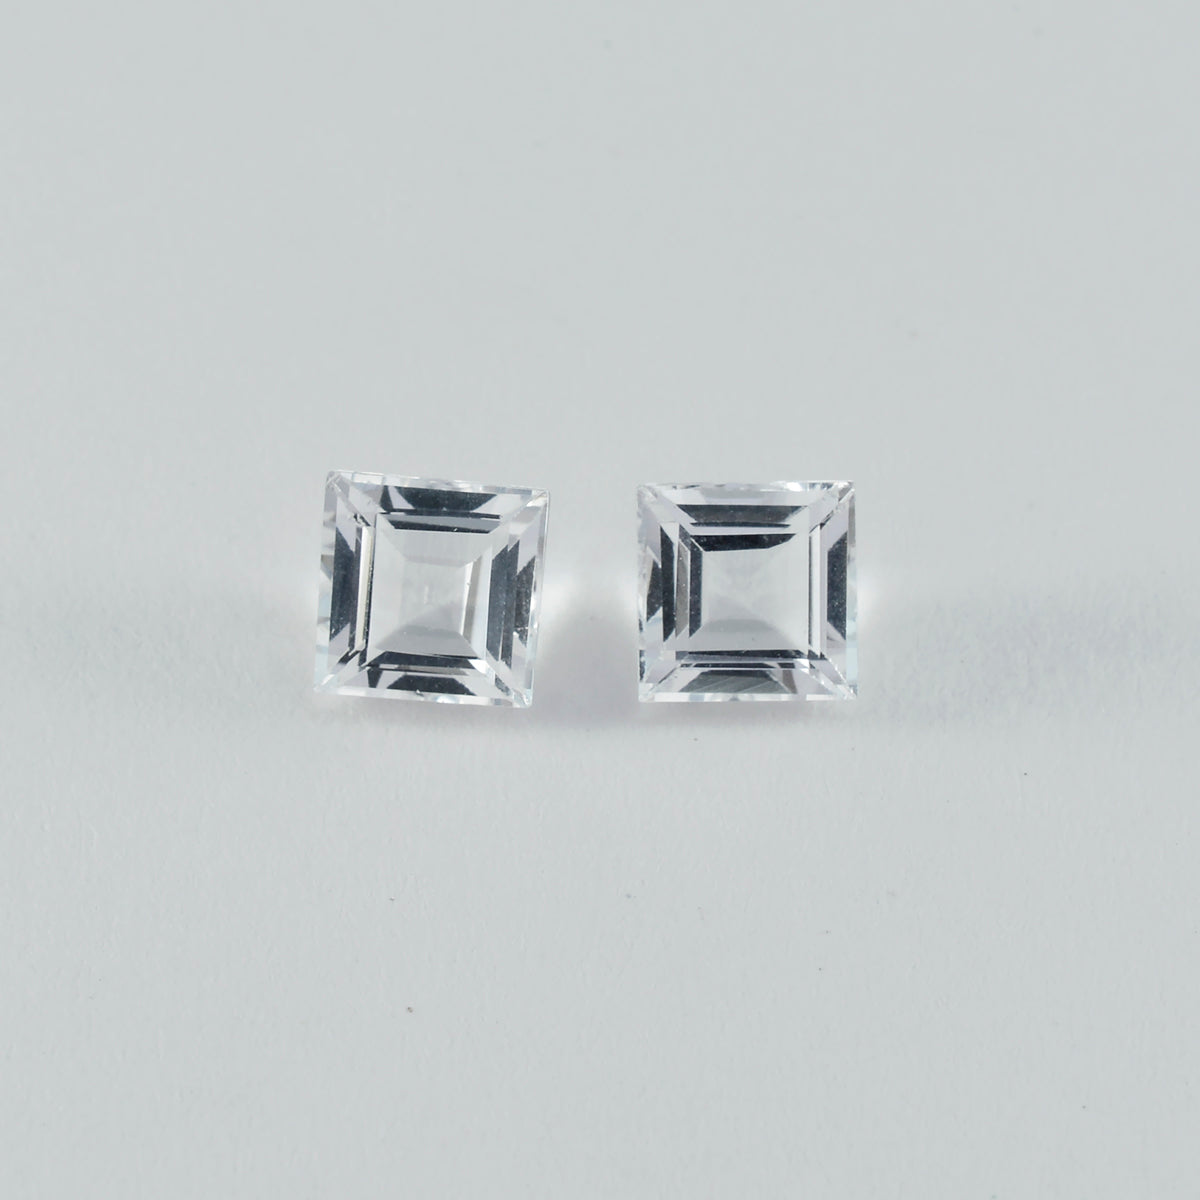 Riyogems 1PC White Crystal Quartz Faceted 11x11 mm Square Shape astonishing Quality Gemstone